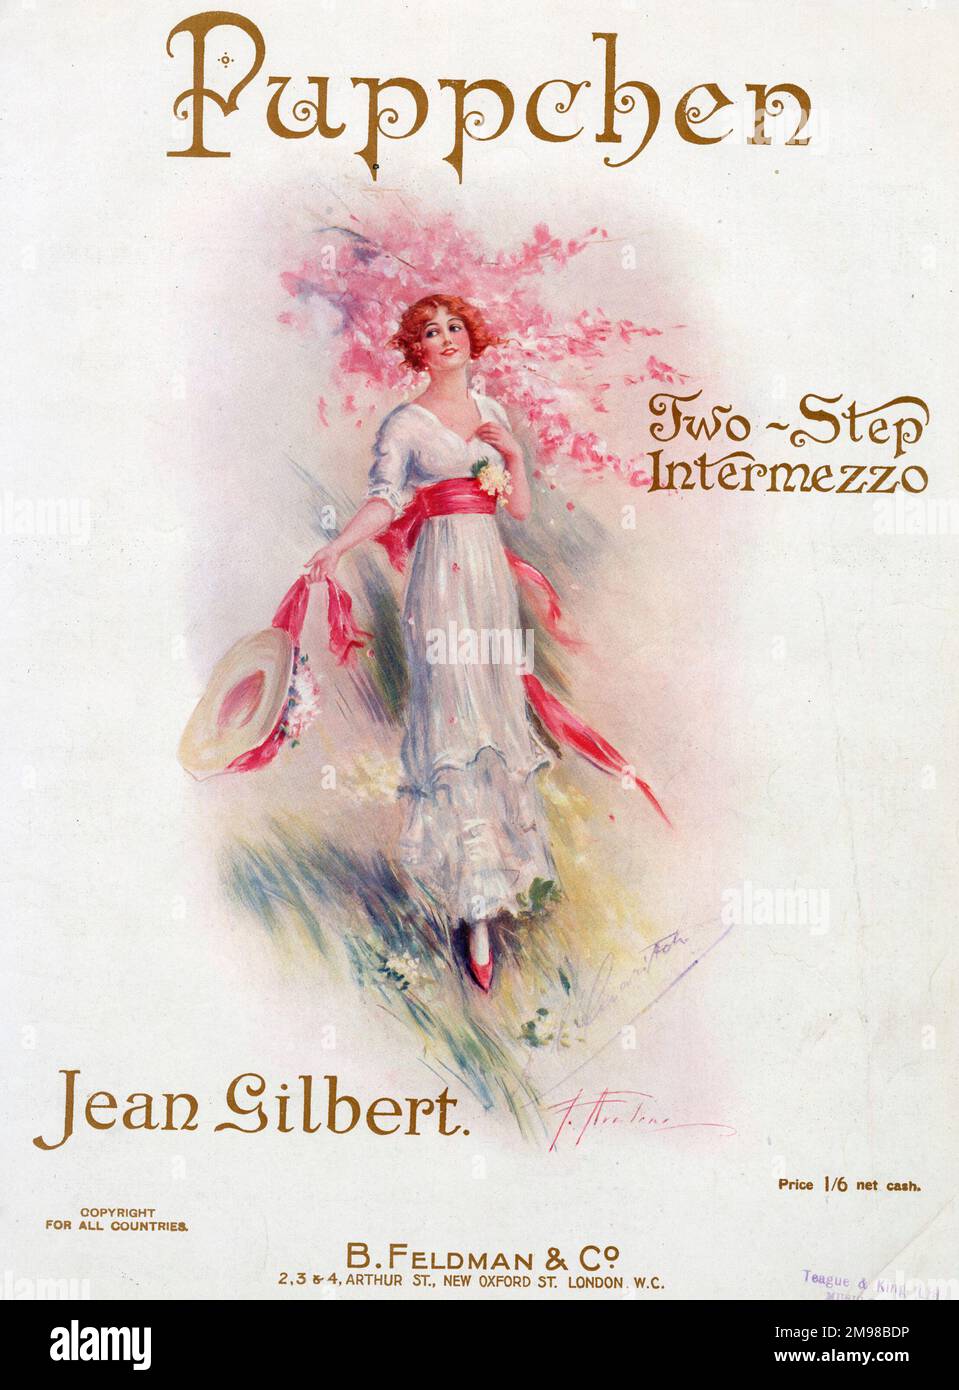 Music cover, Puppchen, two-step intermezzo by Jean Gilbert. Stock Photo